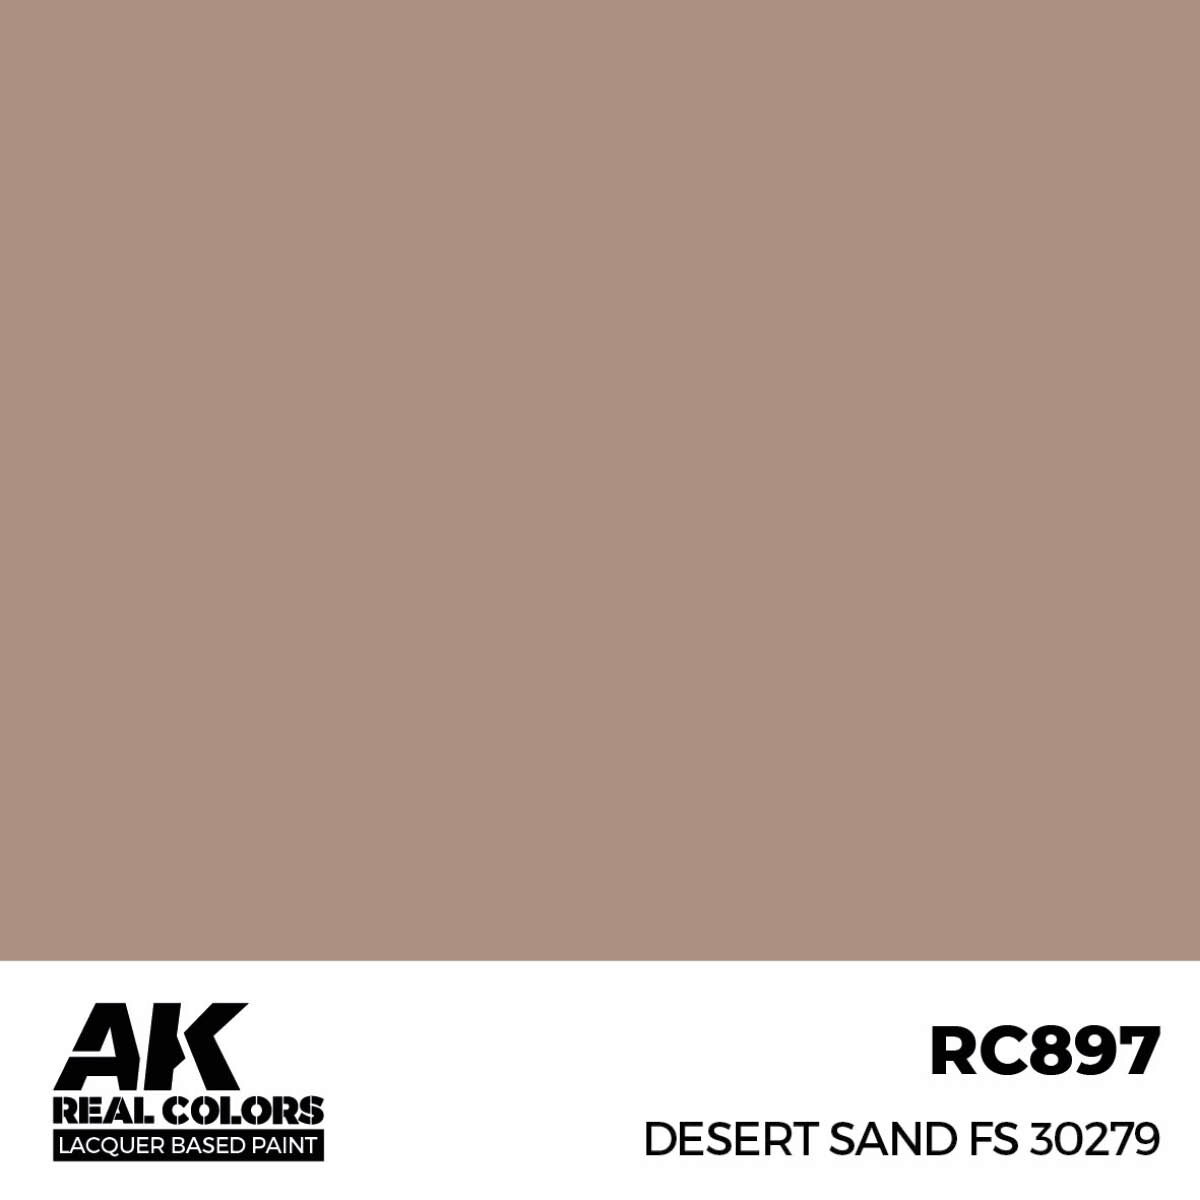 AK RC897 Real Colors Desert Sand FS 30279 17 ml.